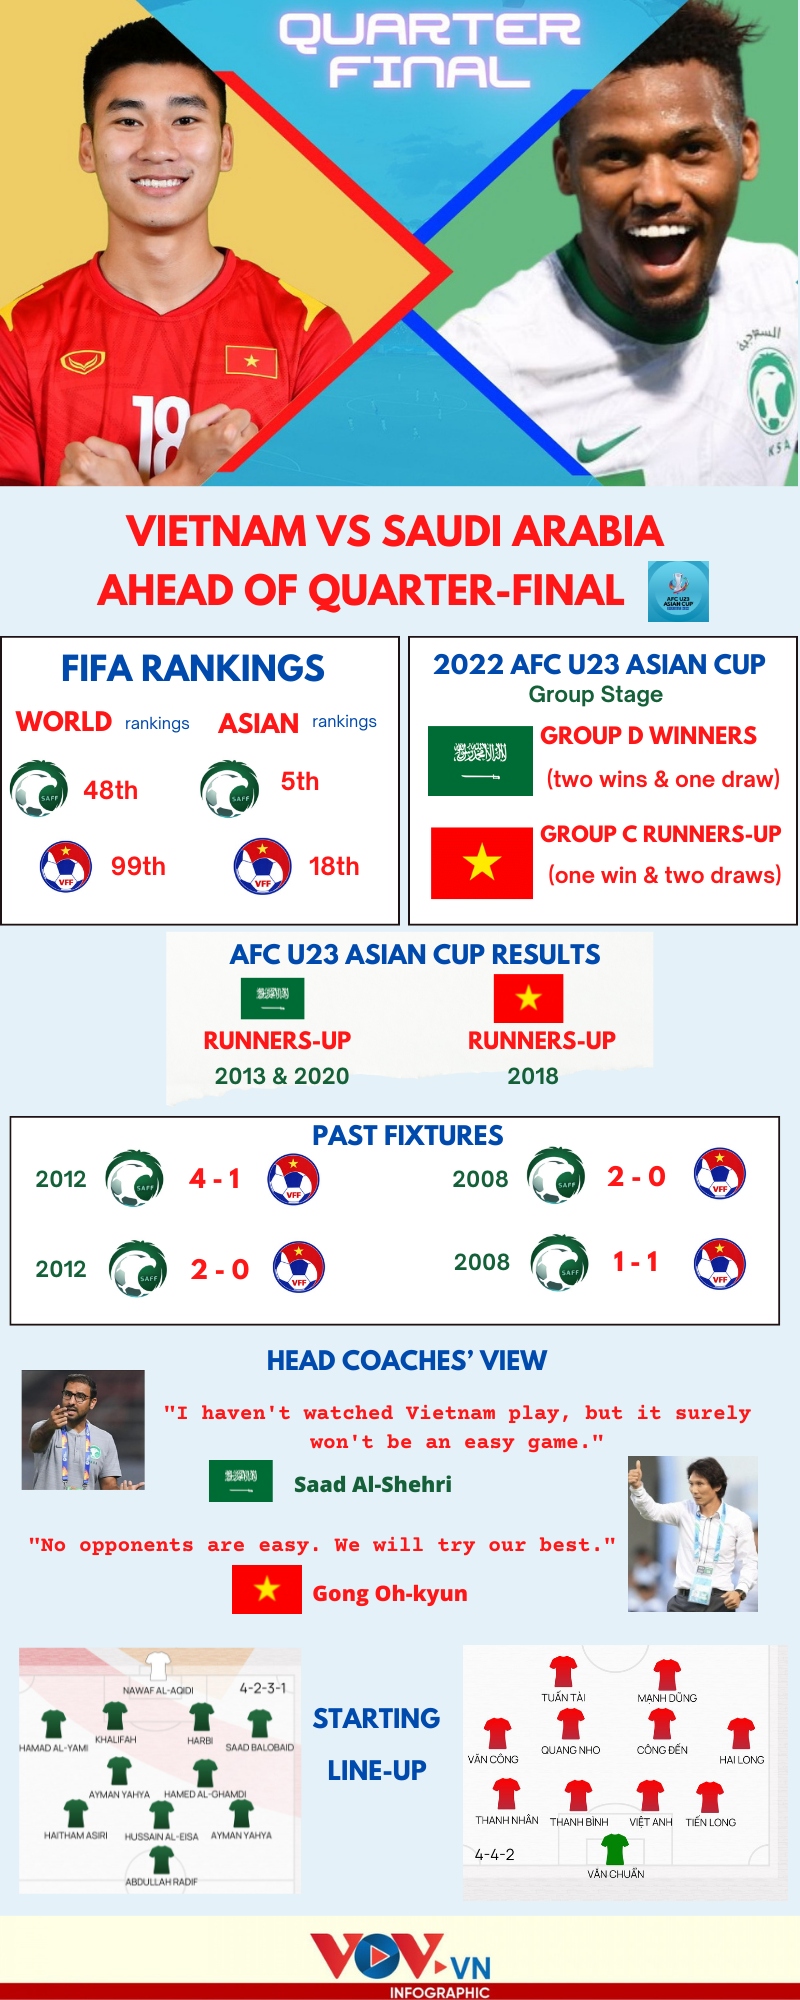 vietnam vs saudi arabia at afc u23 asian cup quarter-finals picture 1